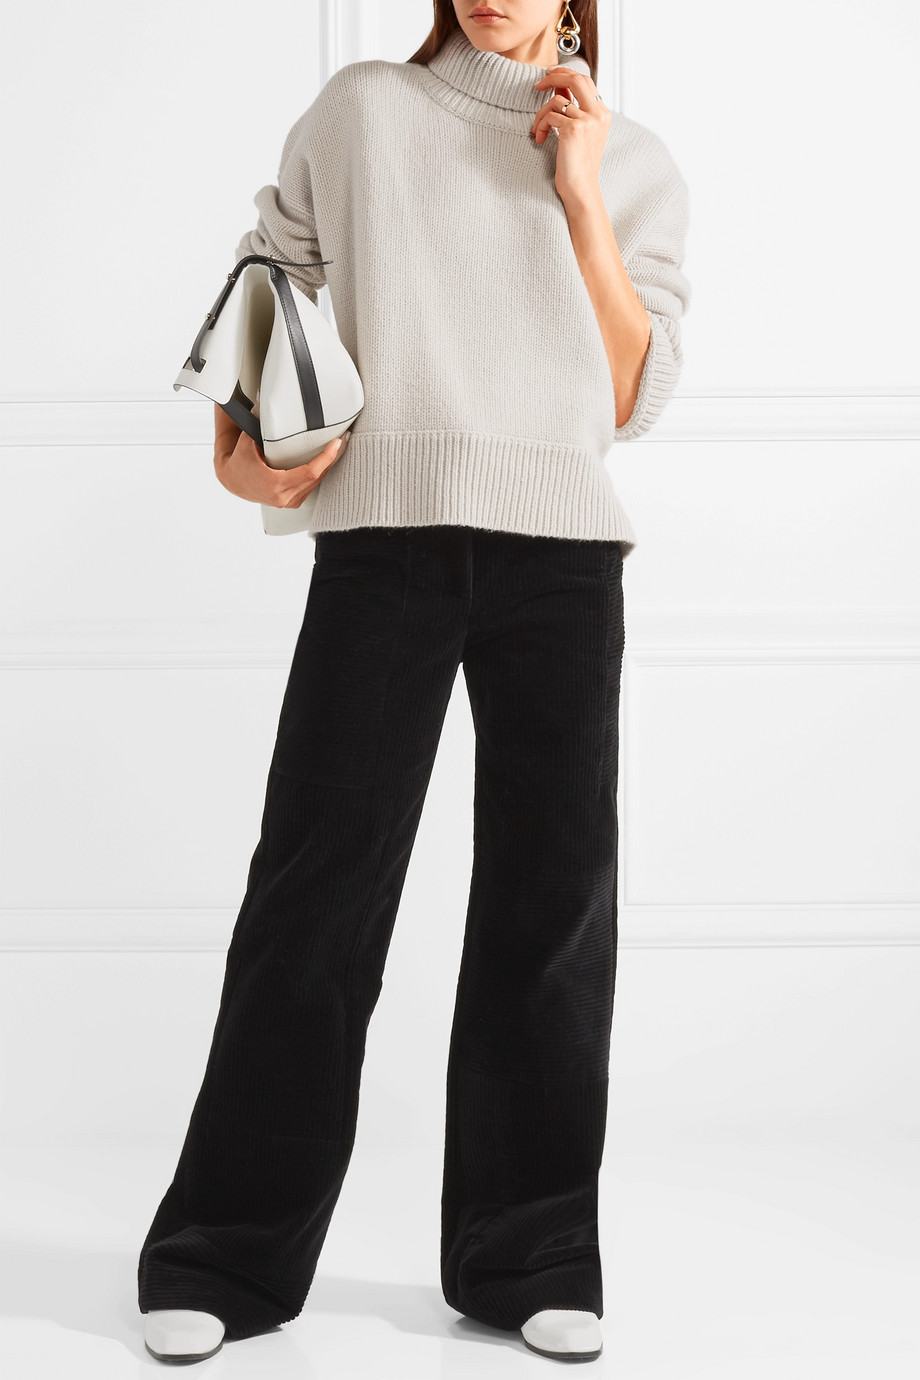  turtleneck sweater + wide-leg pants  Image  via  